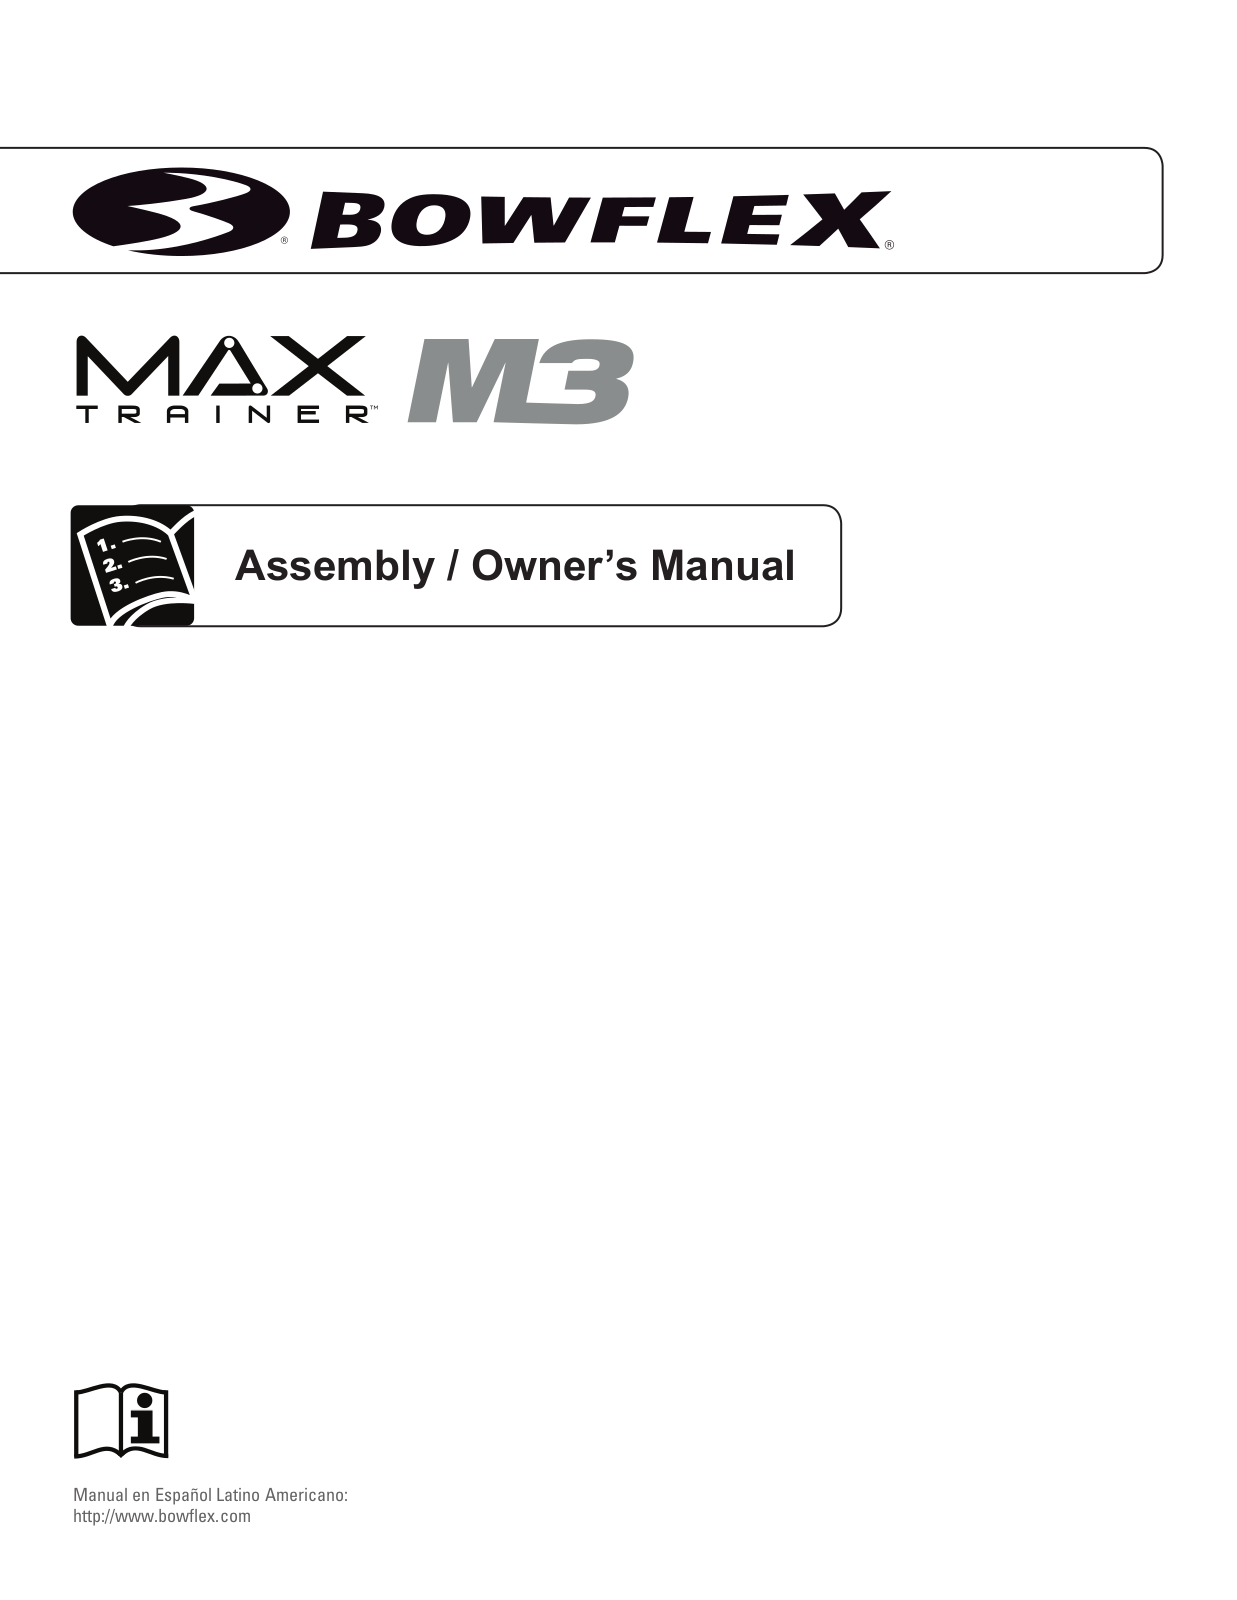 Bowflex MAX Trainer M3 User Manual